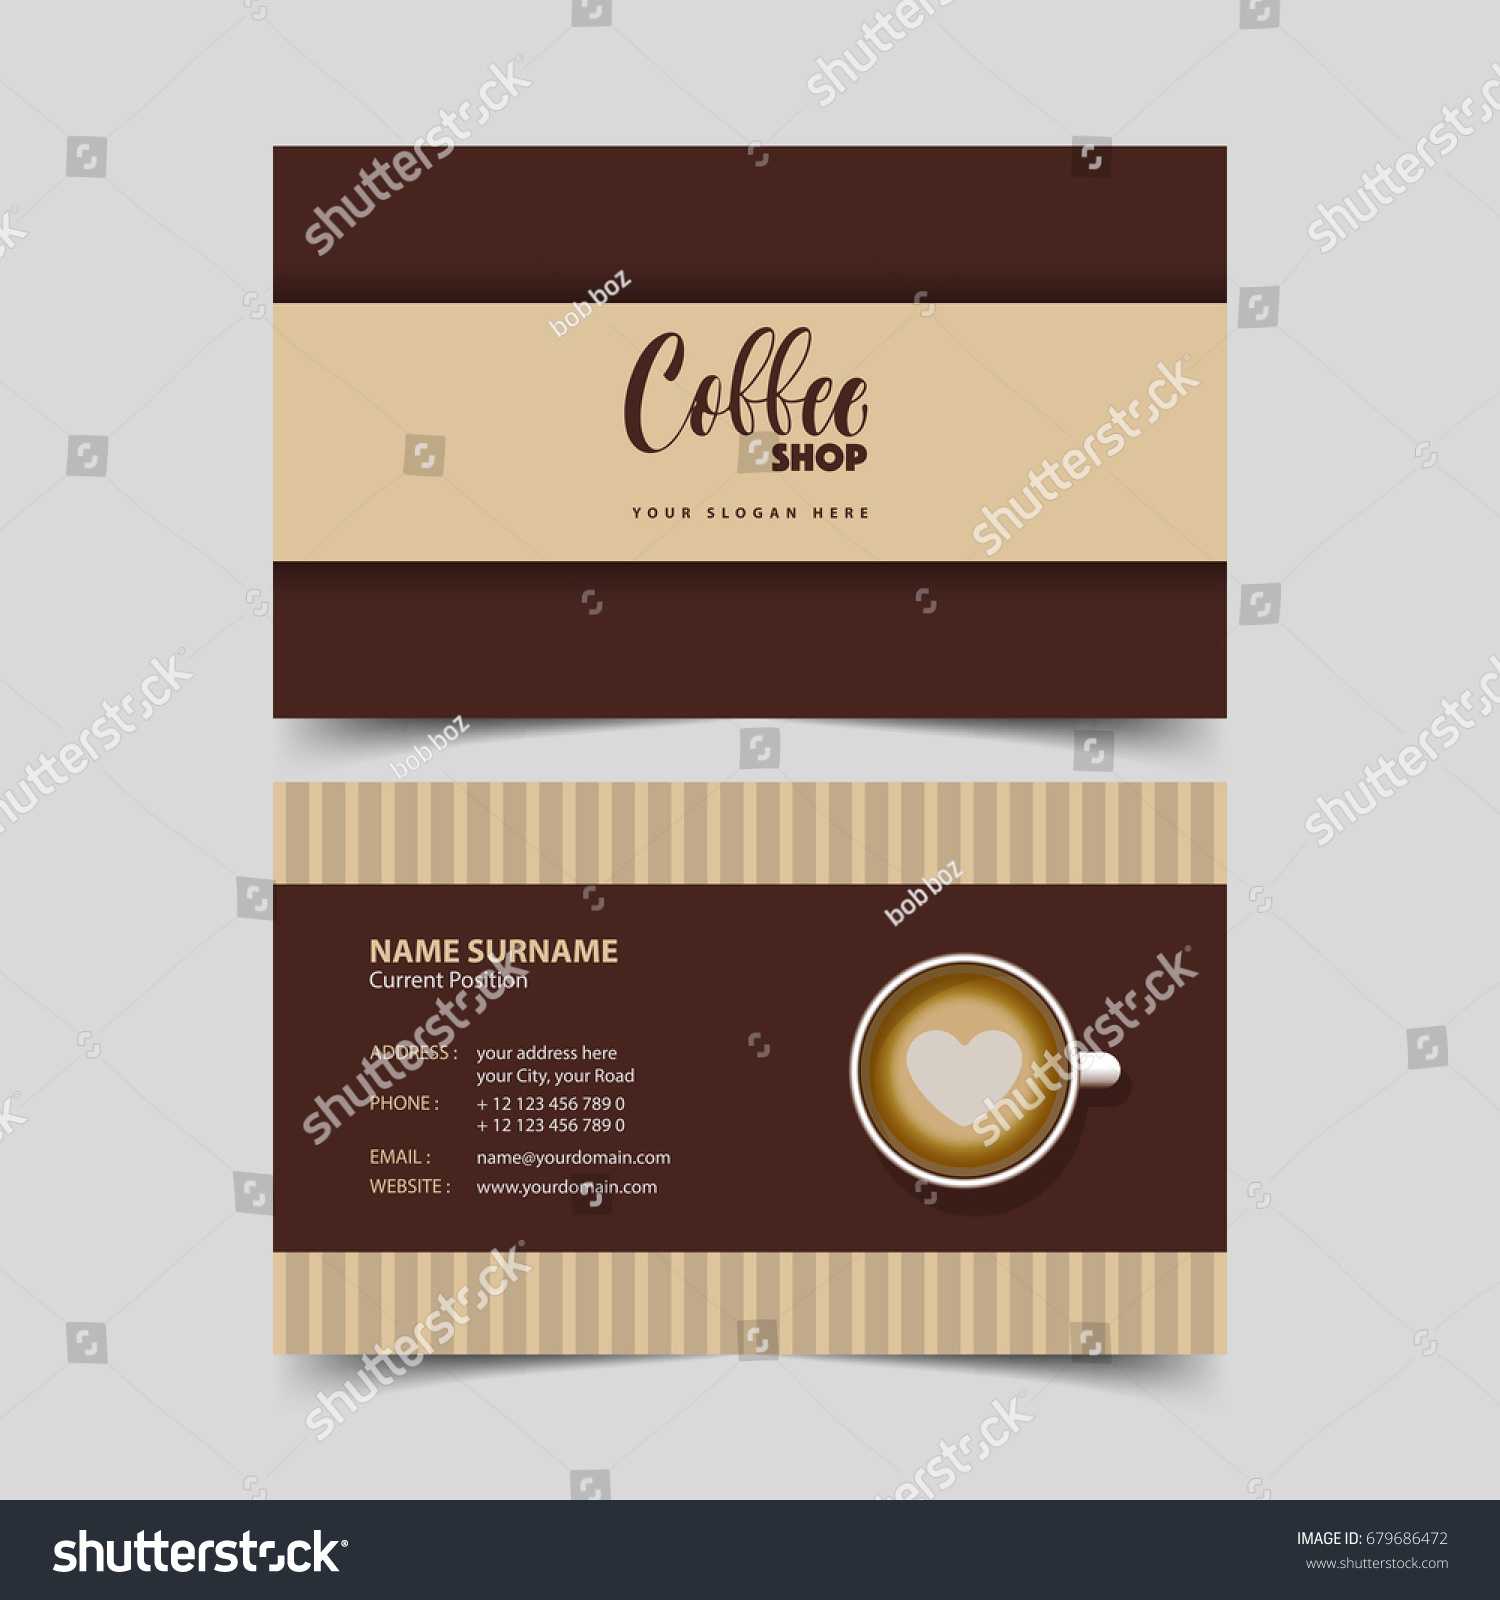 Coffee Shop Business Card Design Template Stock Vector For Coffee Business Card Template Free